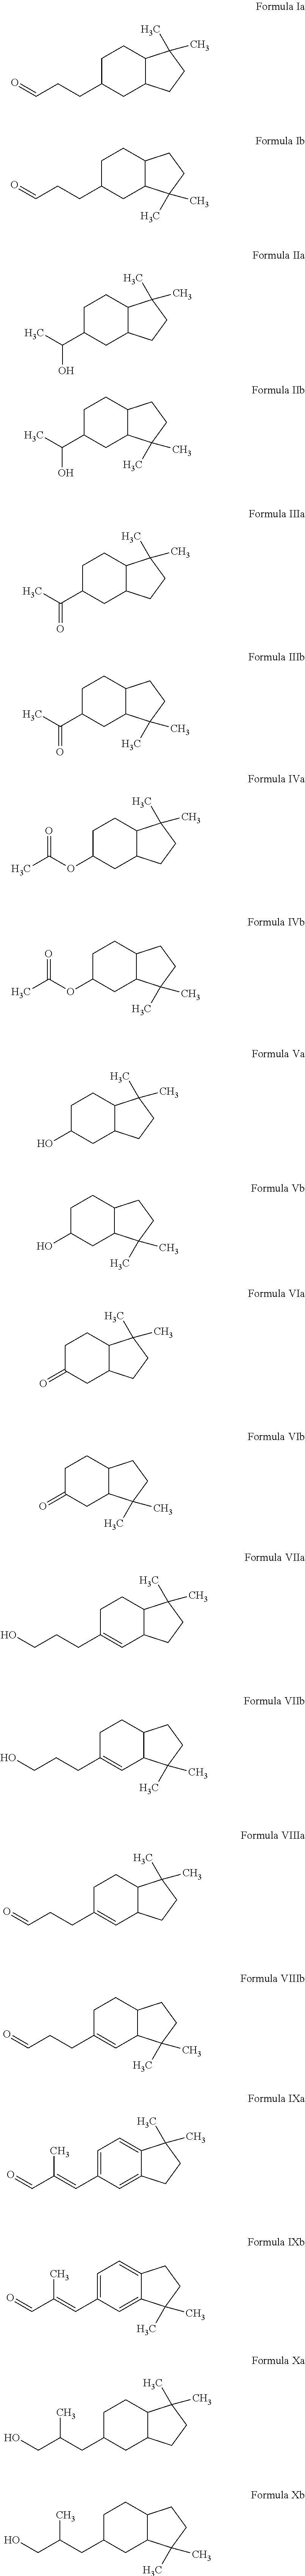 Novel octahydroindenyl propanal compounds